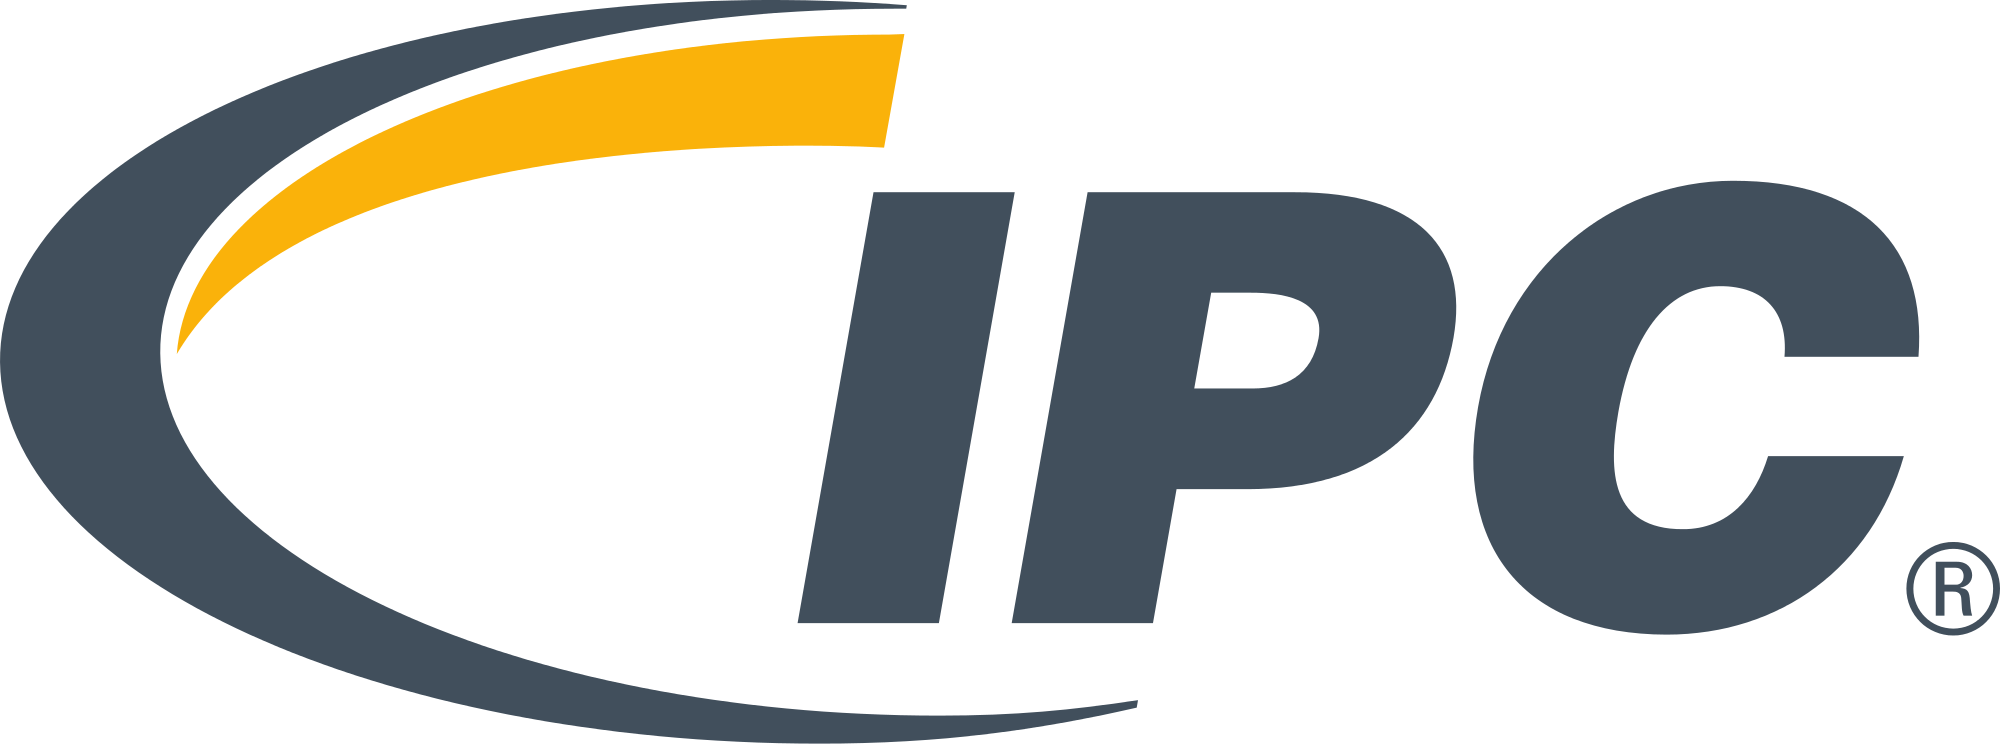 IPC-image